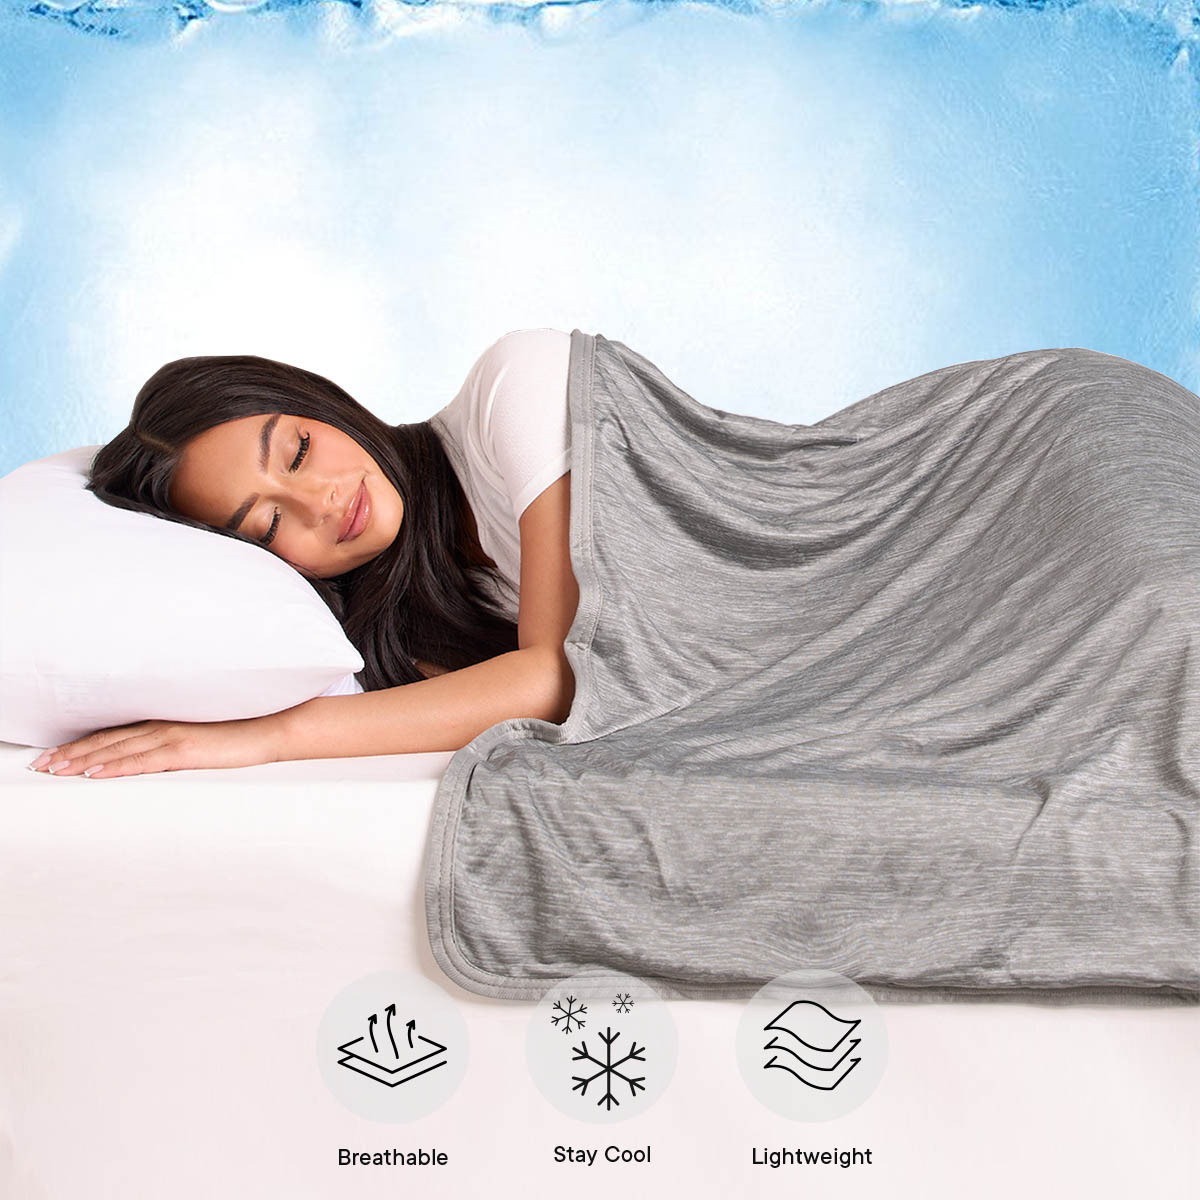 OHS Cooling Blanket, Grey - 120 x 150cm>